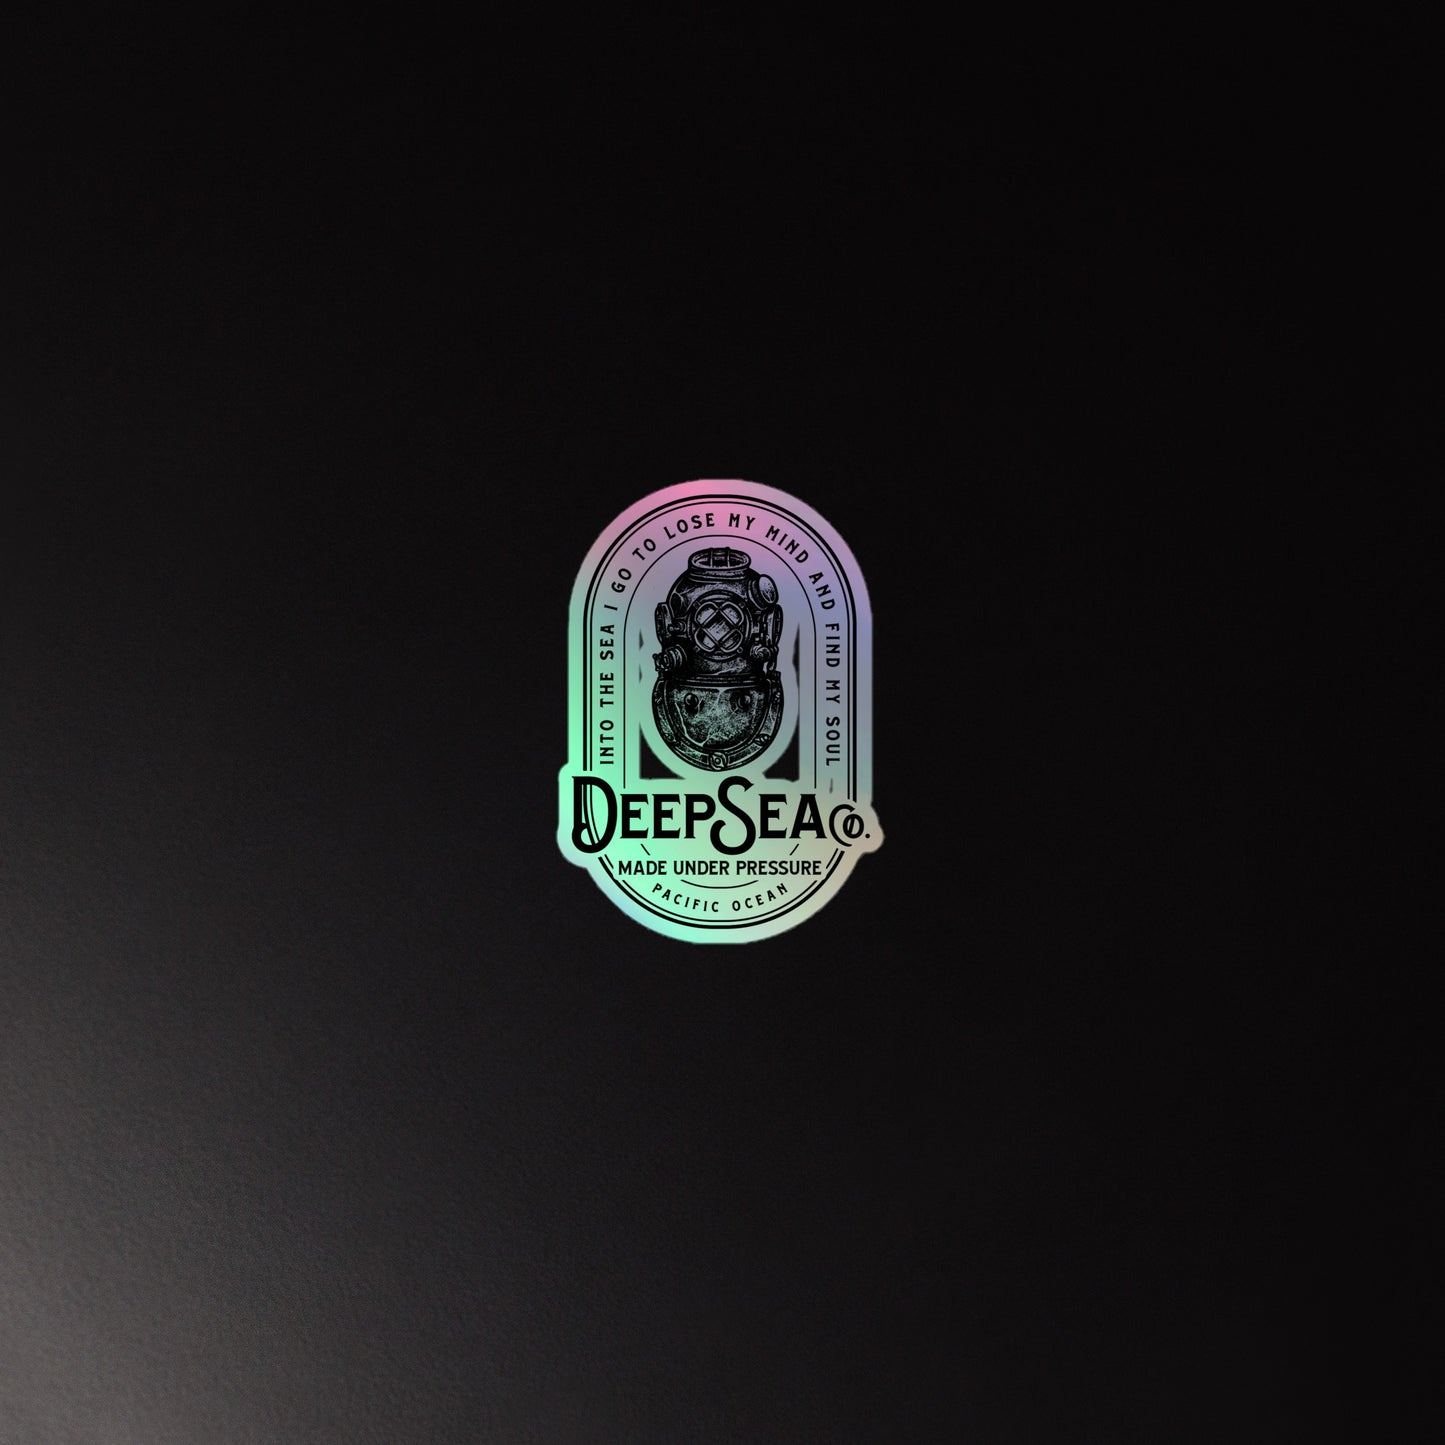 DeepSea Co. Holographic sticker